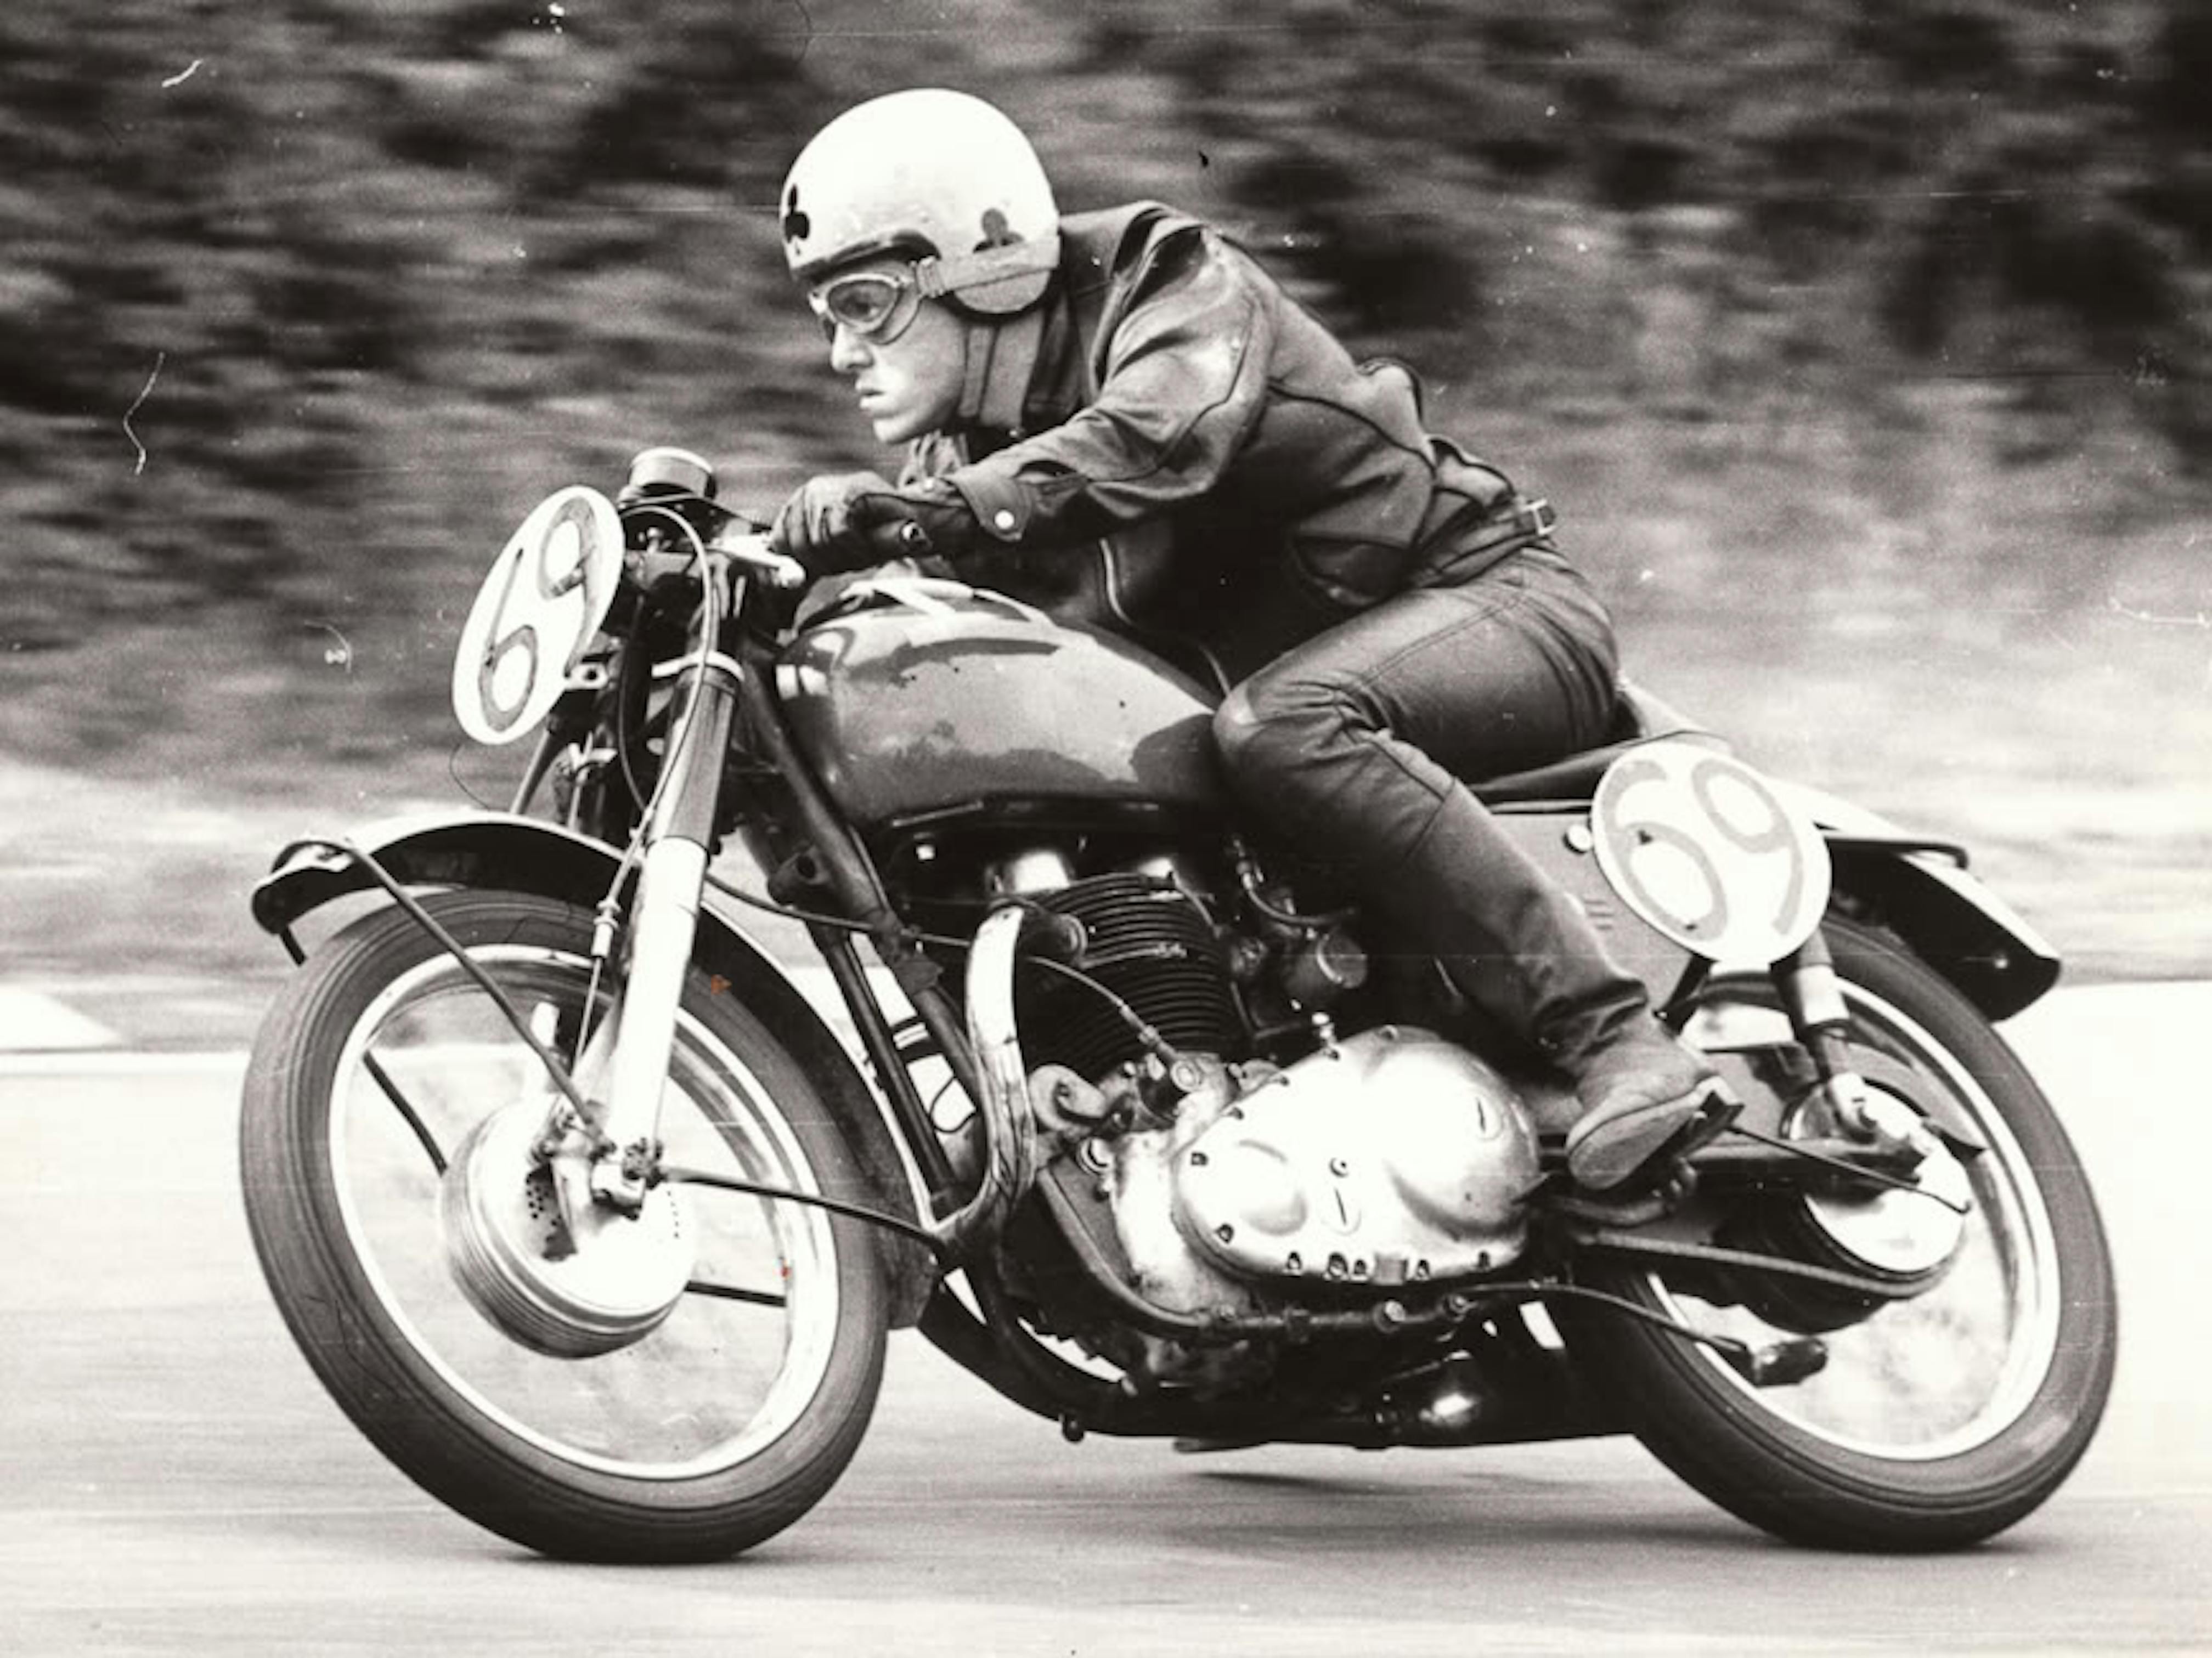 Old motorcycle racer on vintage motorcycle